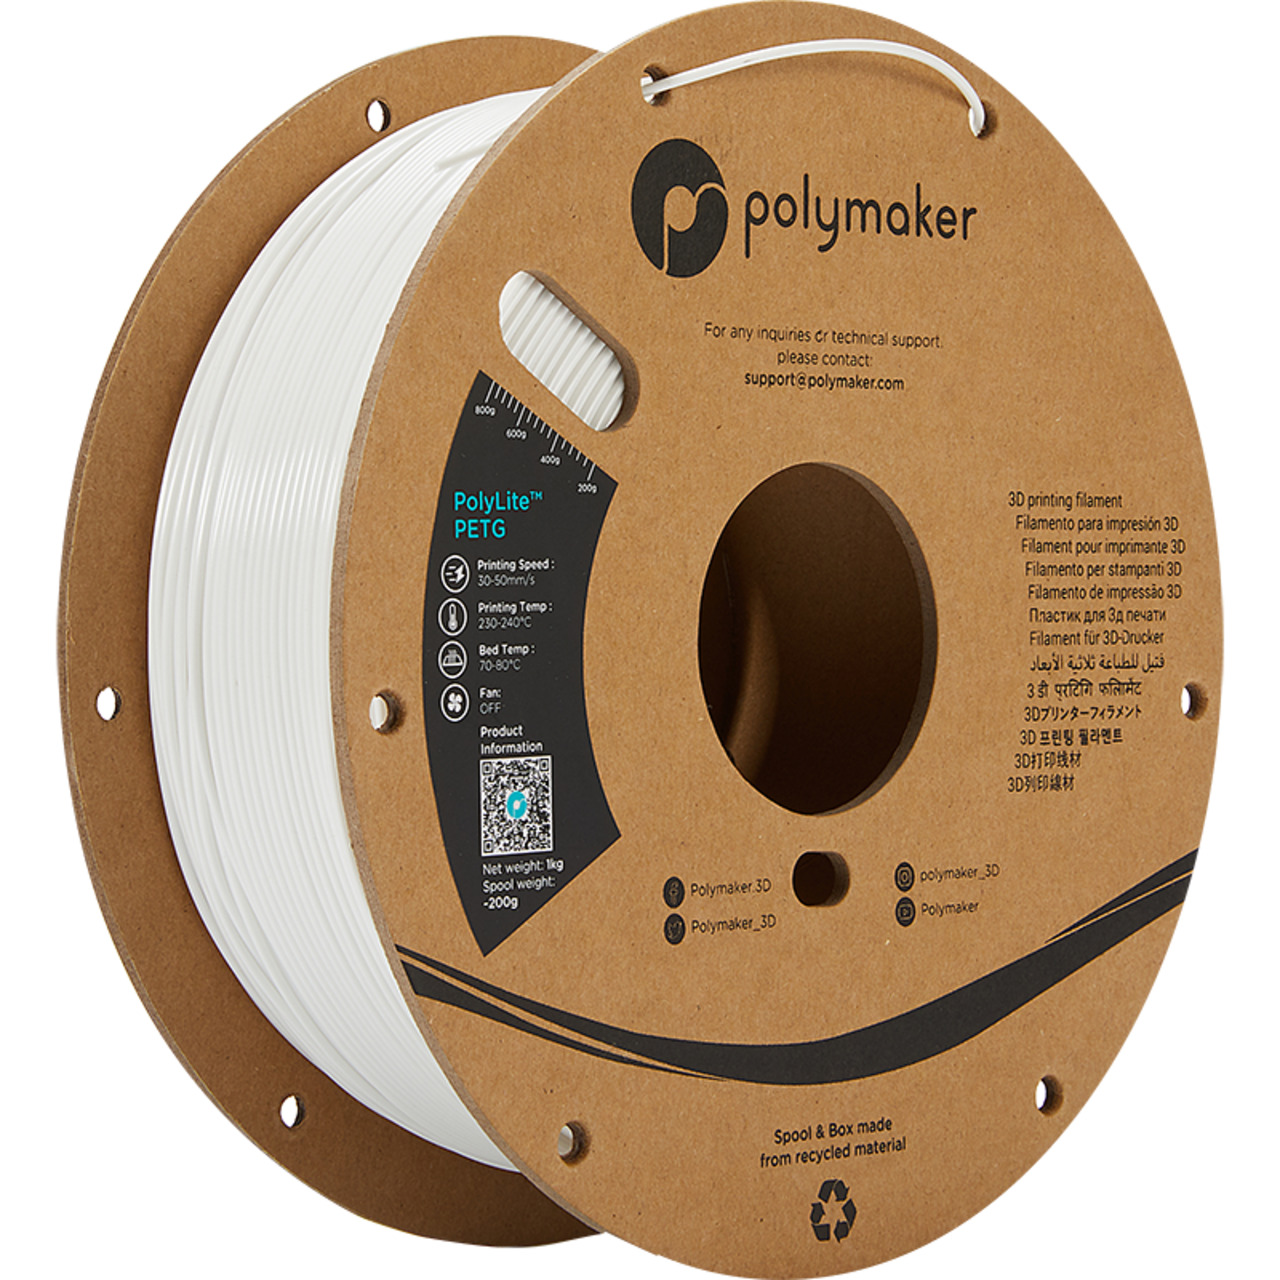 Polymaker PETG-Filament PolyLite- weiss- 1-75 mm- 1 kg unter PC-Hardware